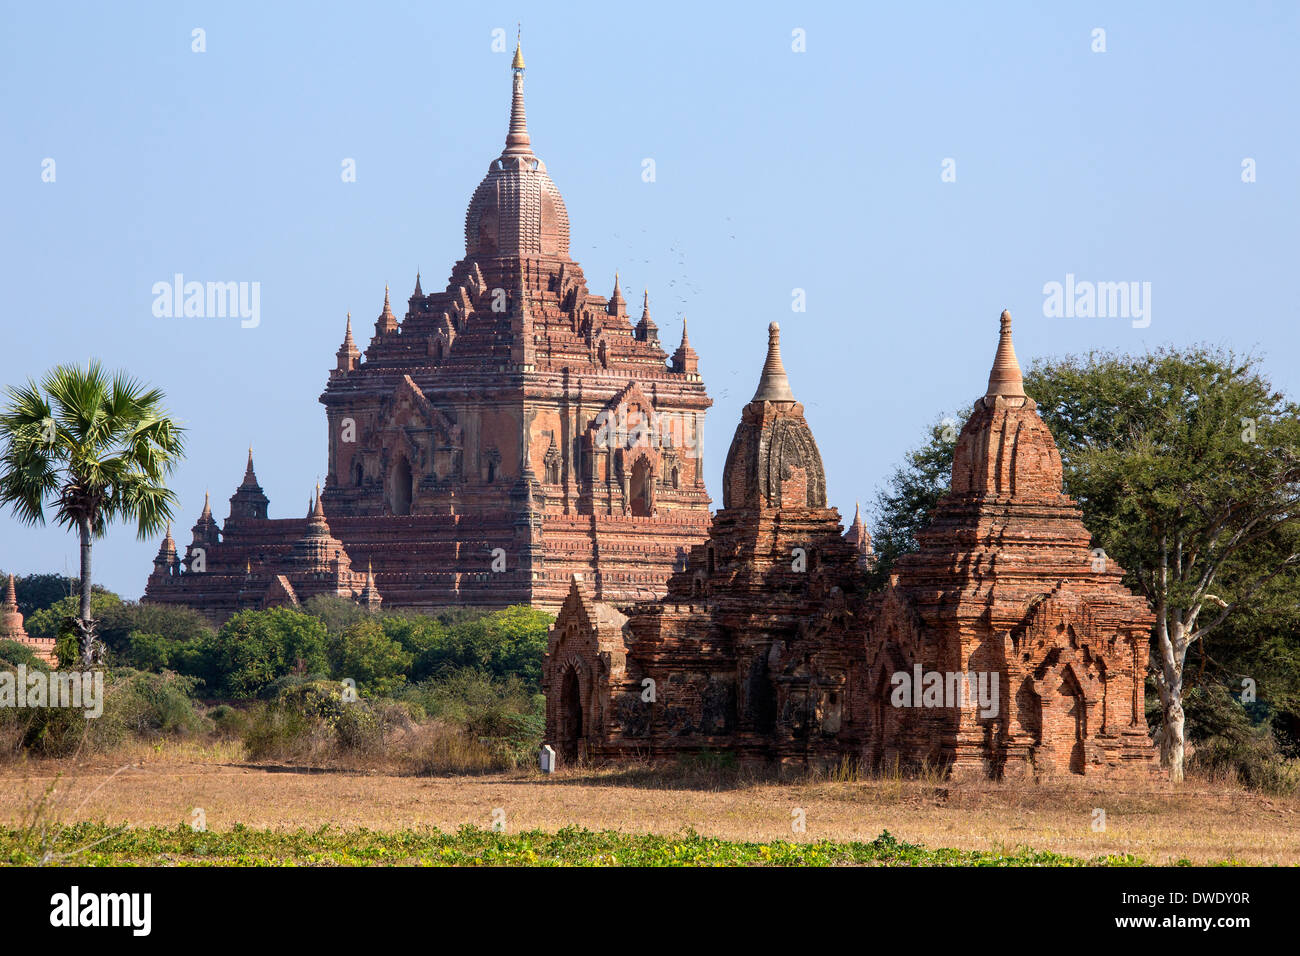 The Sulamani Temple in the Bagan Archaeological Zone in Myanmar (Burma). Stock Photo